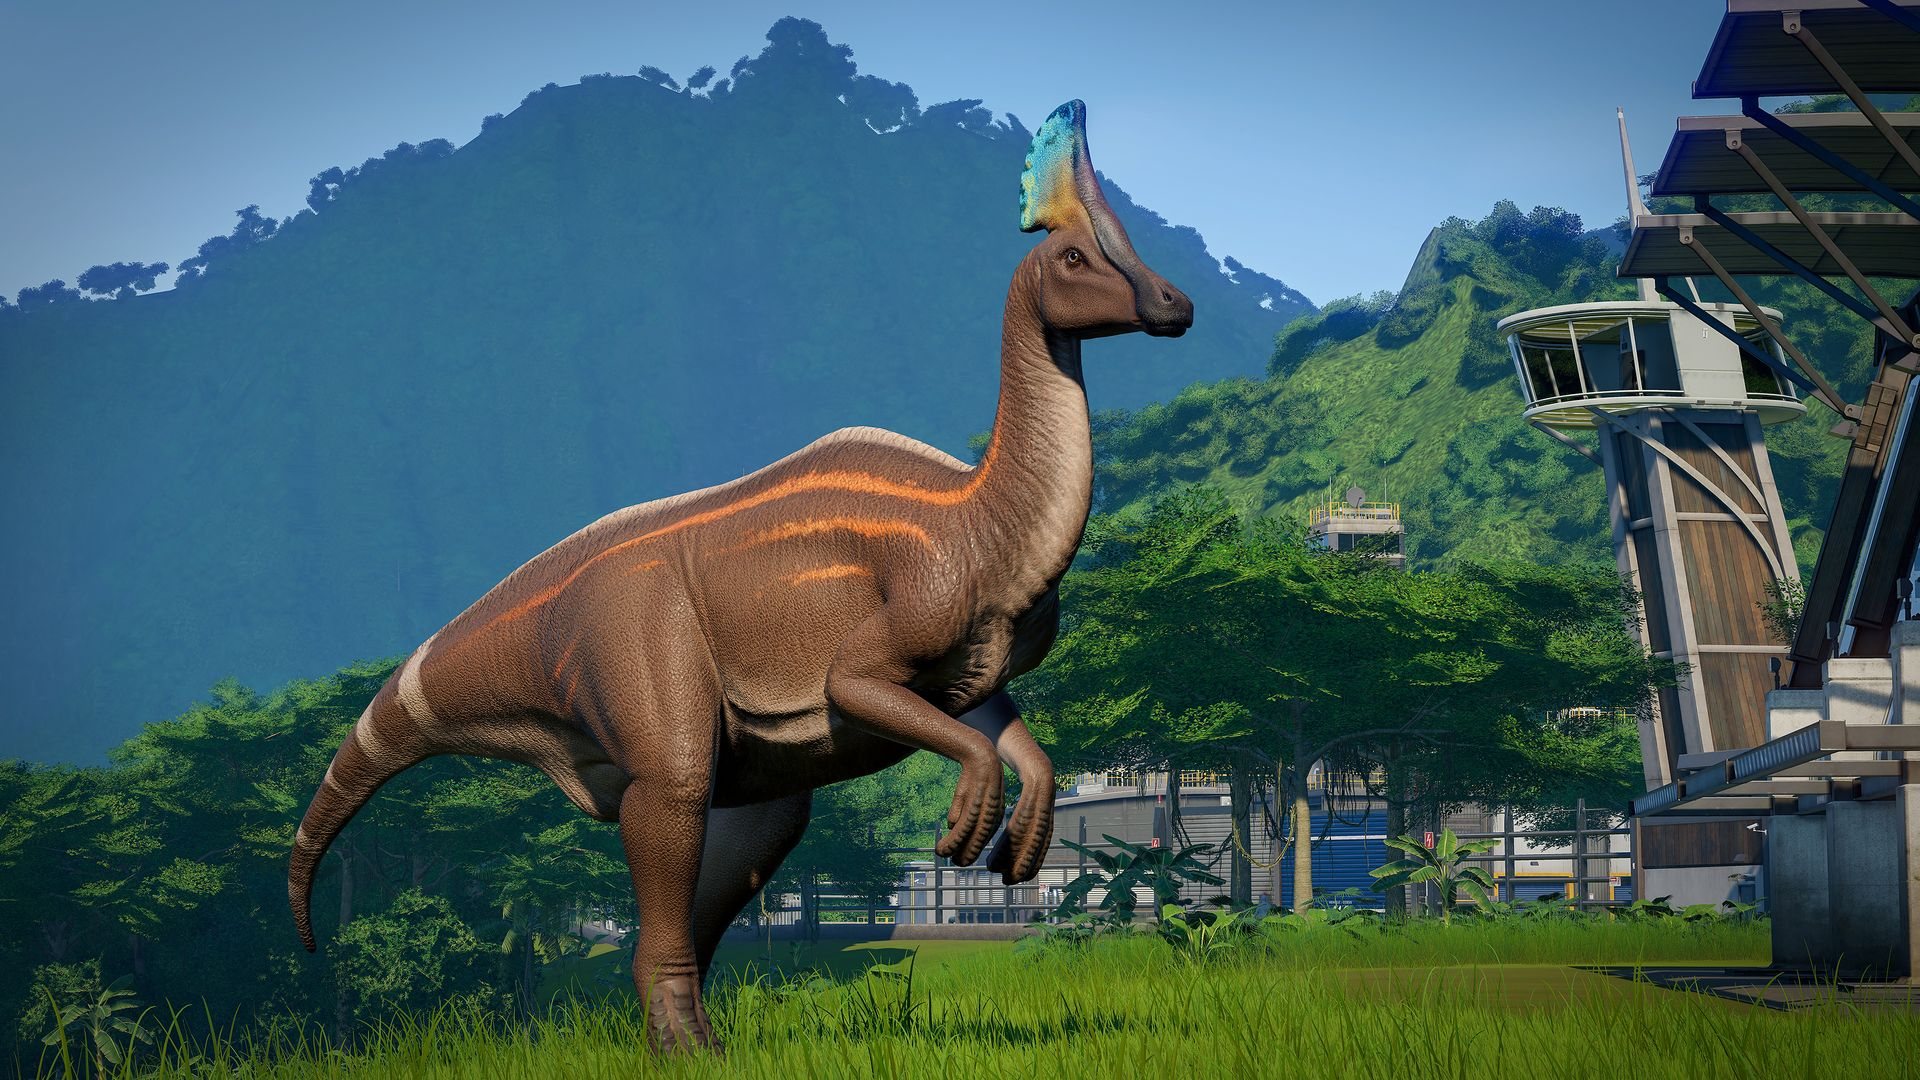 Jurassic World Evolution - Secrets Of Dr Wu DLC Steam CD Key